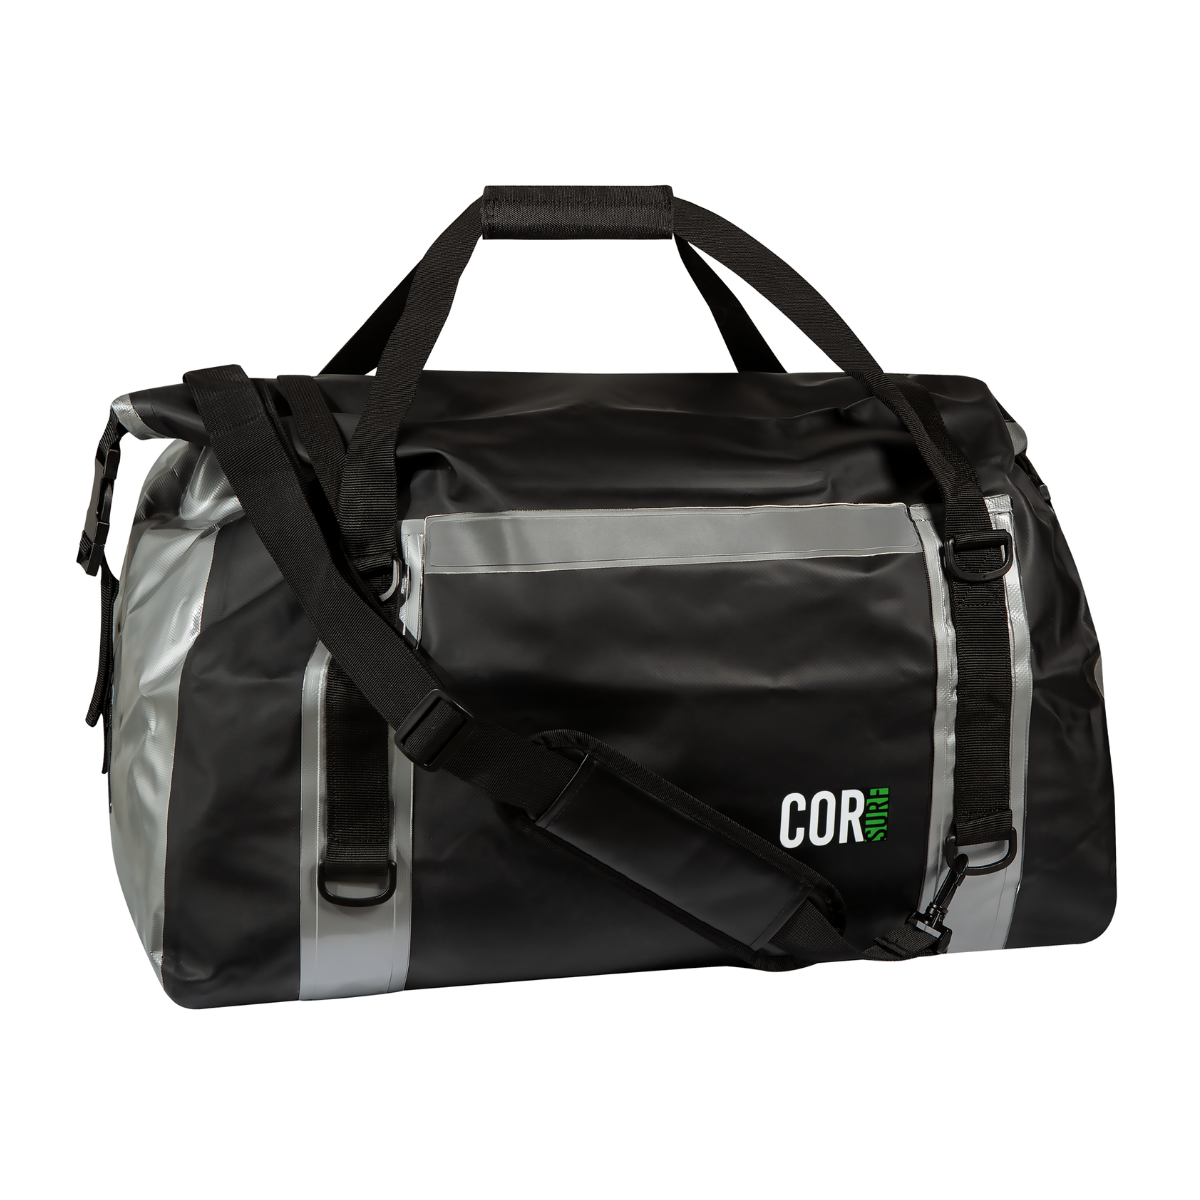 COR Surf Waterproof Lightweight Duffle Bag 60l Travel Bag Water Resistant Pocket - image 1 of 6